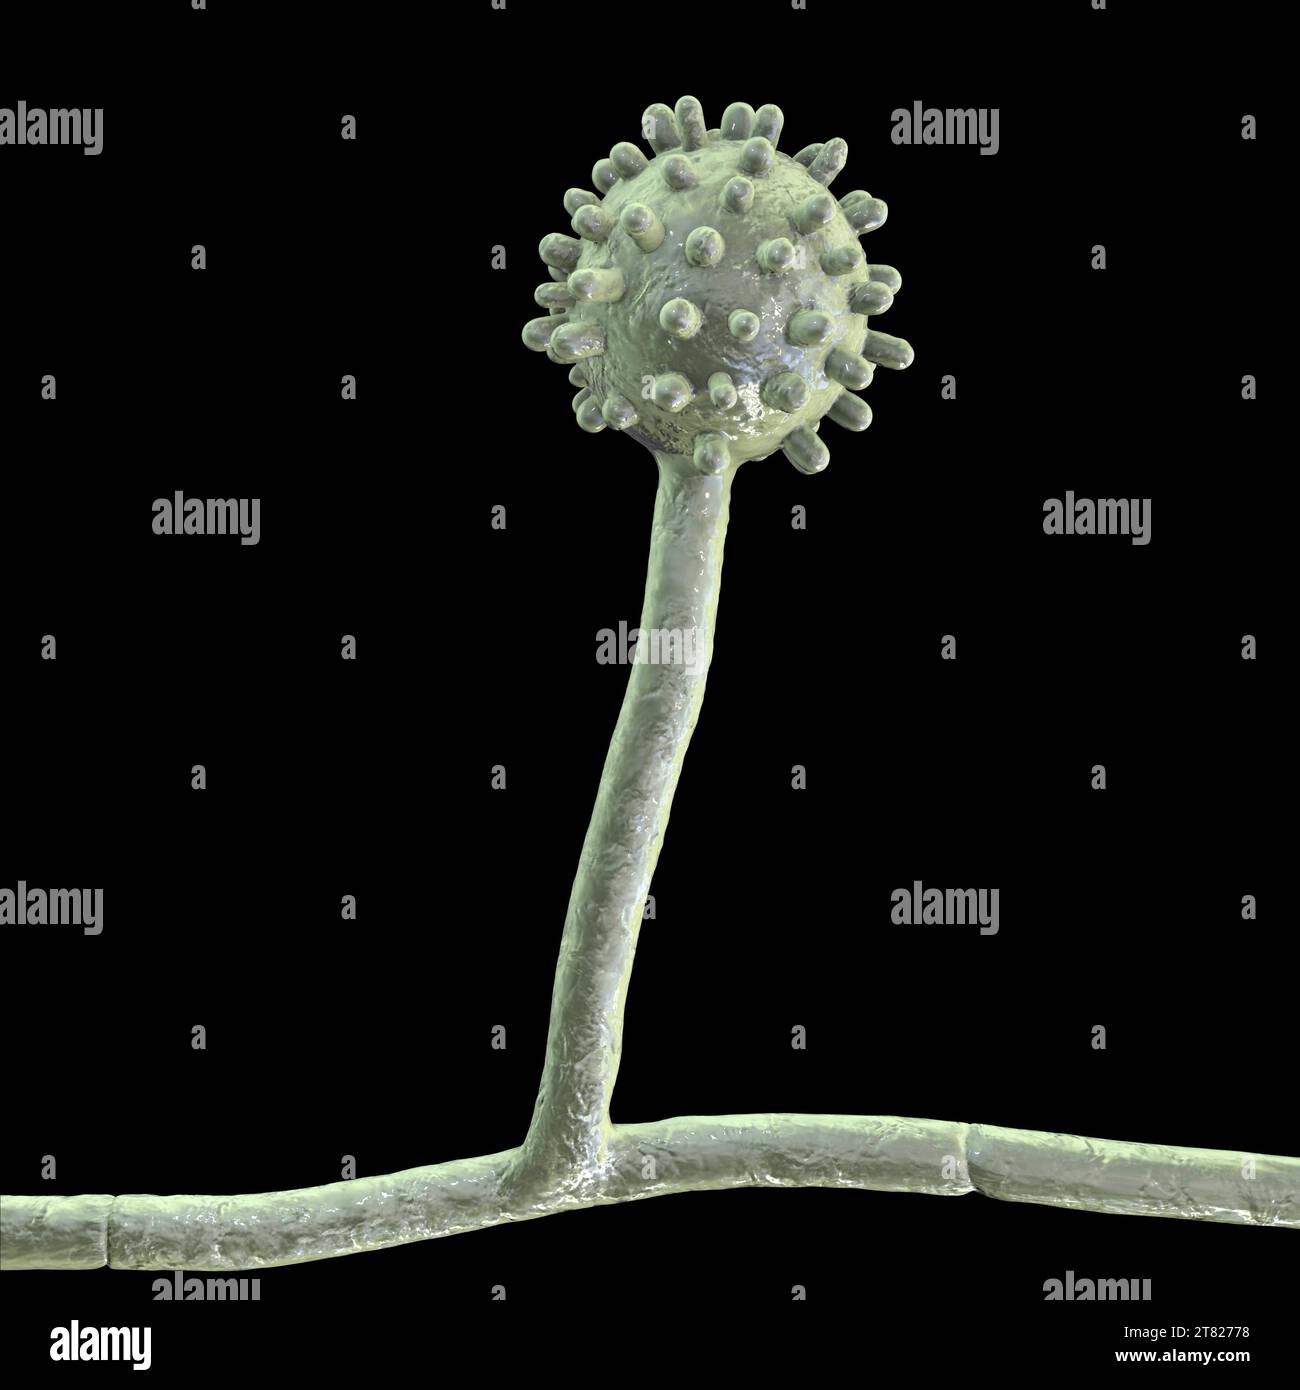 Histoplasma capsulatum fungus, illustration Stock Photo